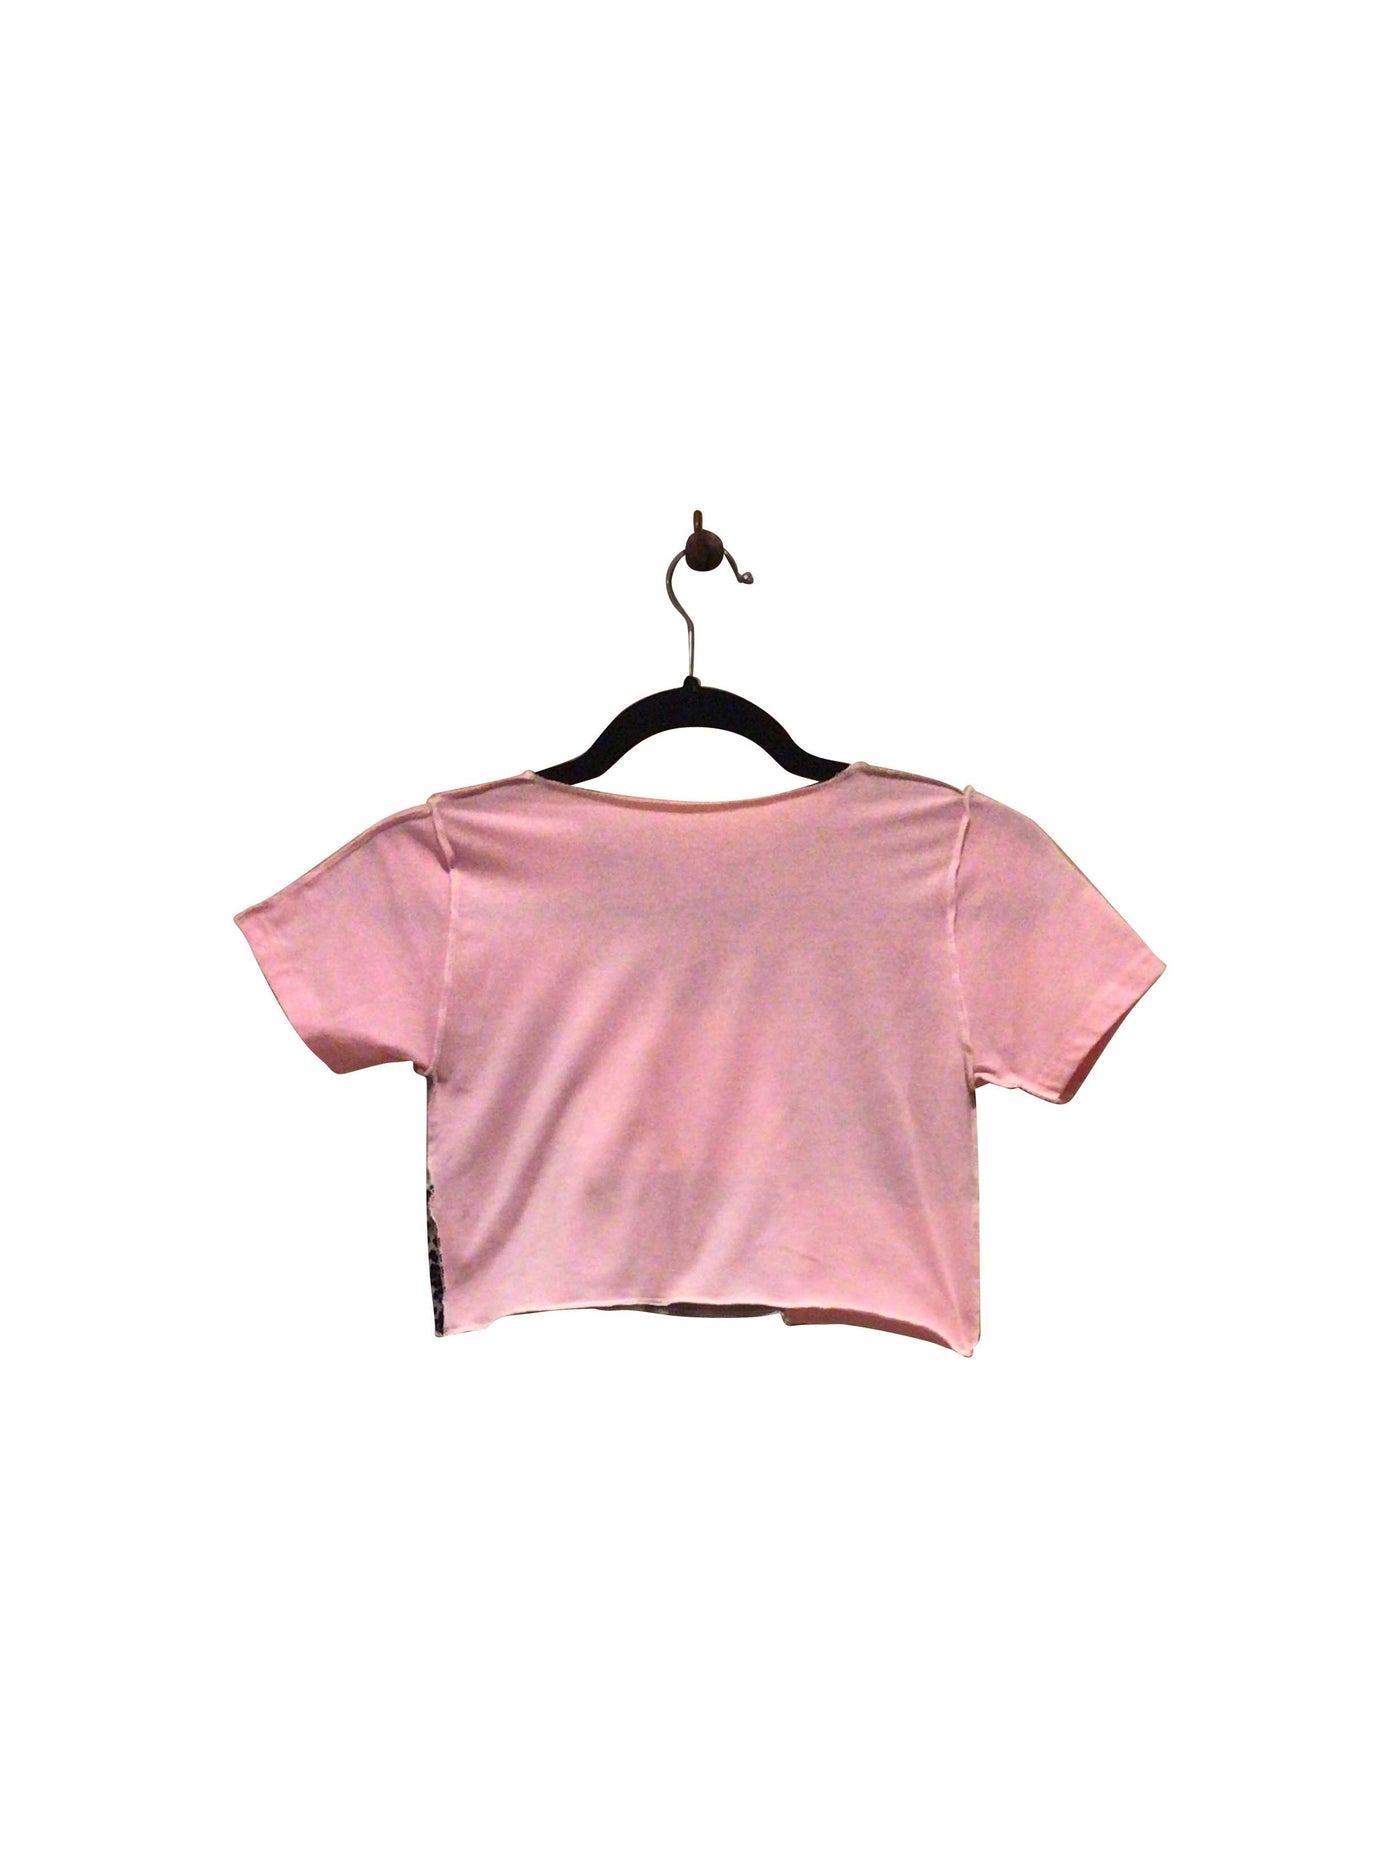 UNBRANDED Regular fit Crop top in Pink  -  S  8.99 Koop